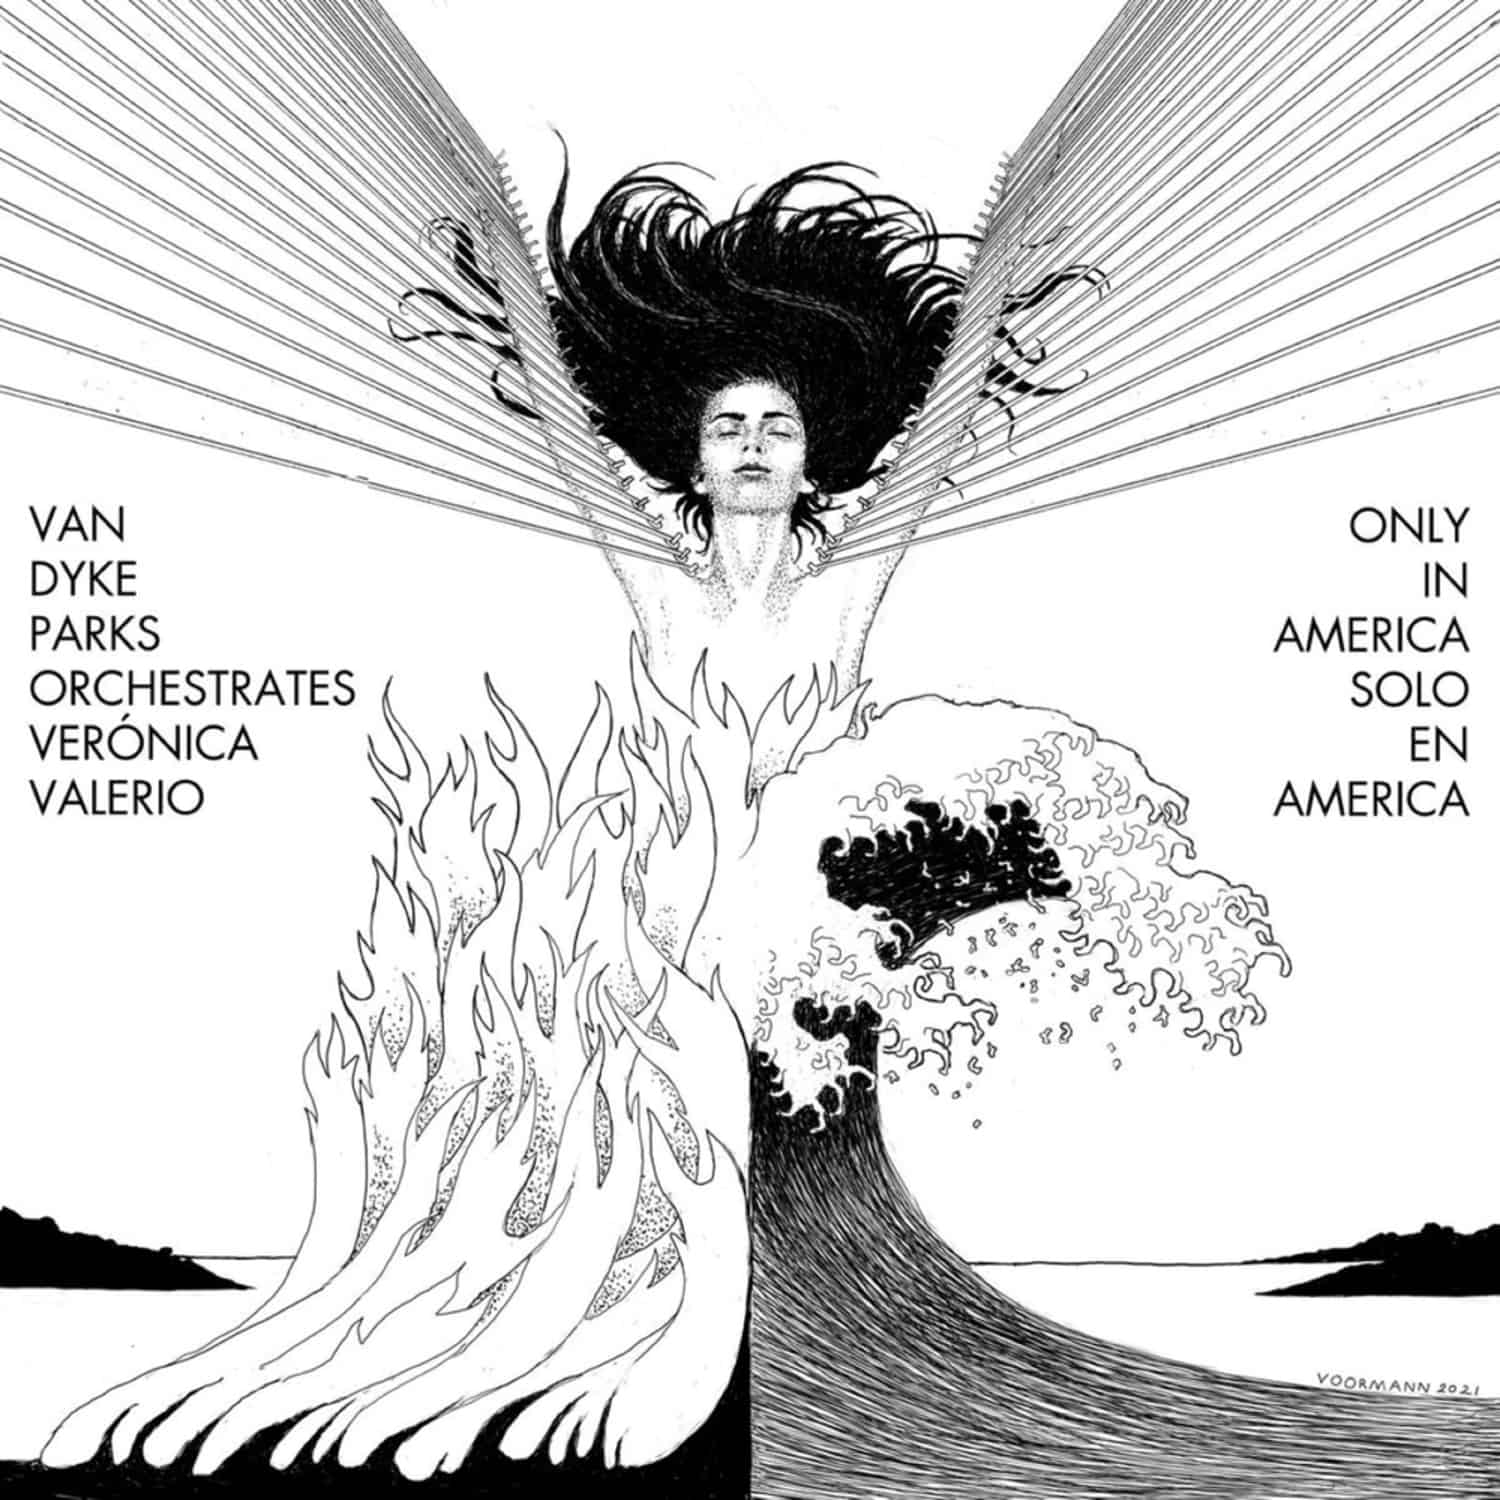 Van Dyke Parks & Veronica Valerio - VAN DYKE PARKS ORCHESTRATES VERNICA VALERIO:ONLY 